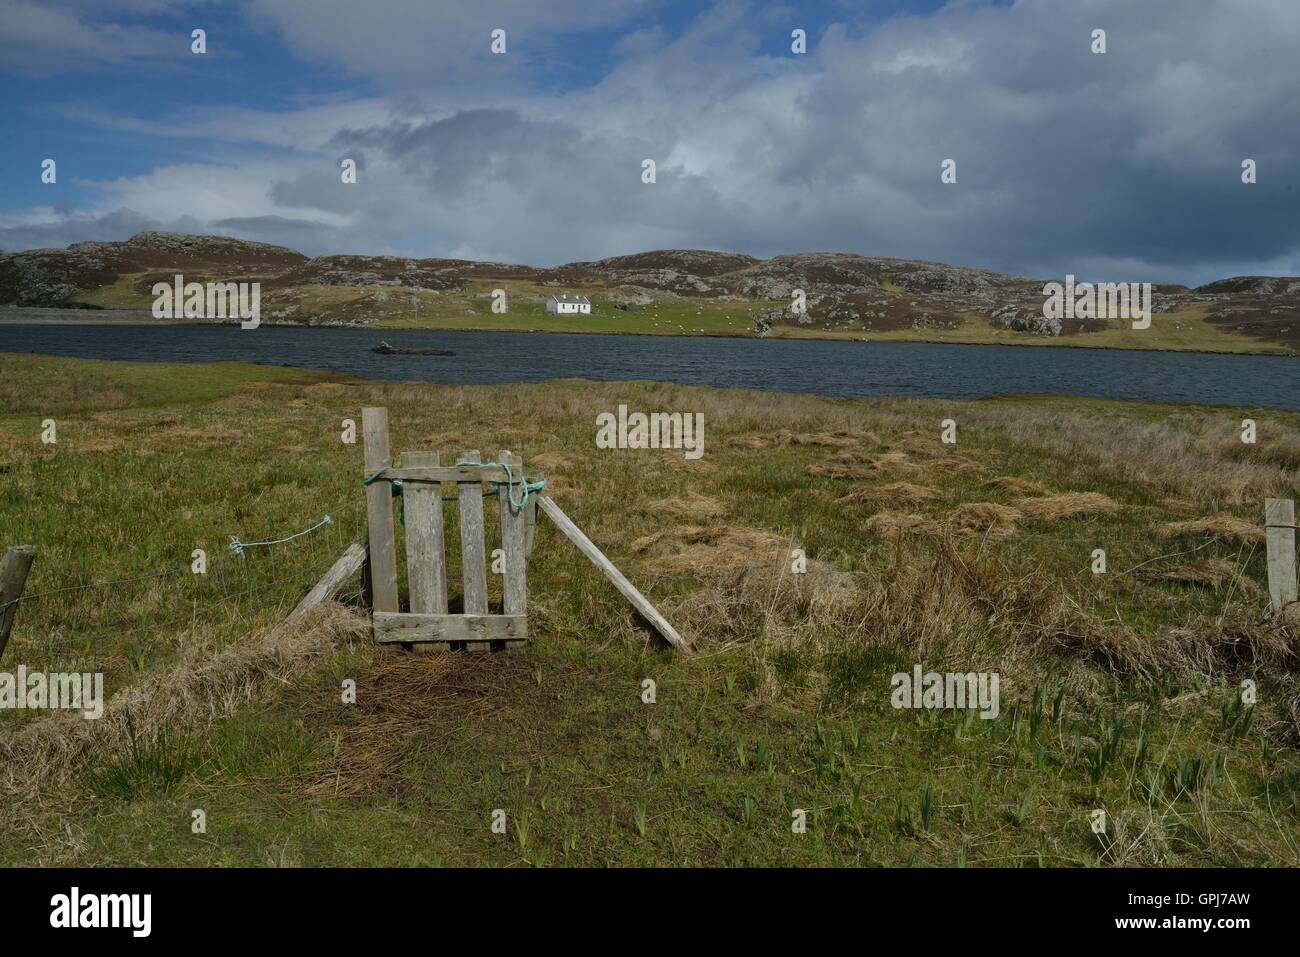 Inishbofin è un'isola irlandese nella Contea di Galway 8 km dal Connemara Coast. - Île irlandaise située dans le Comté de Galway, Iuna isla irlandesa.. Foto Stock